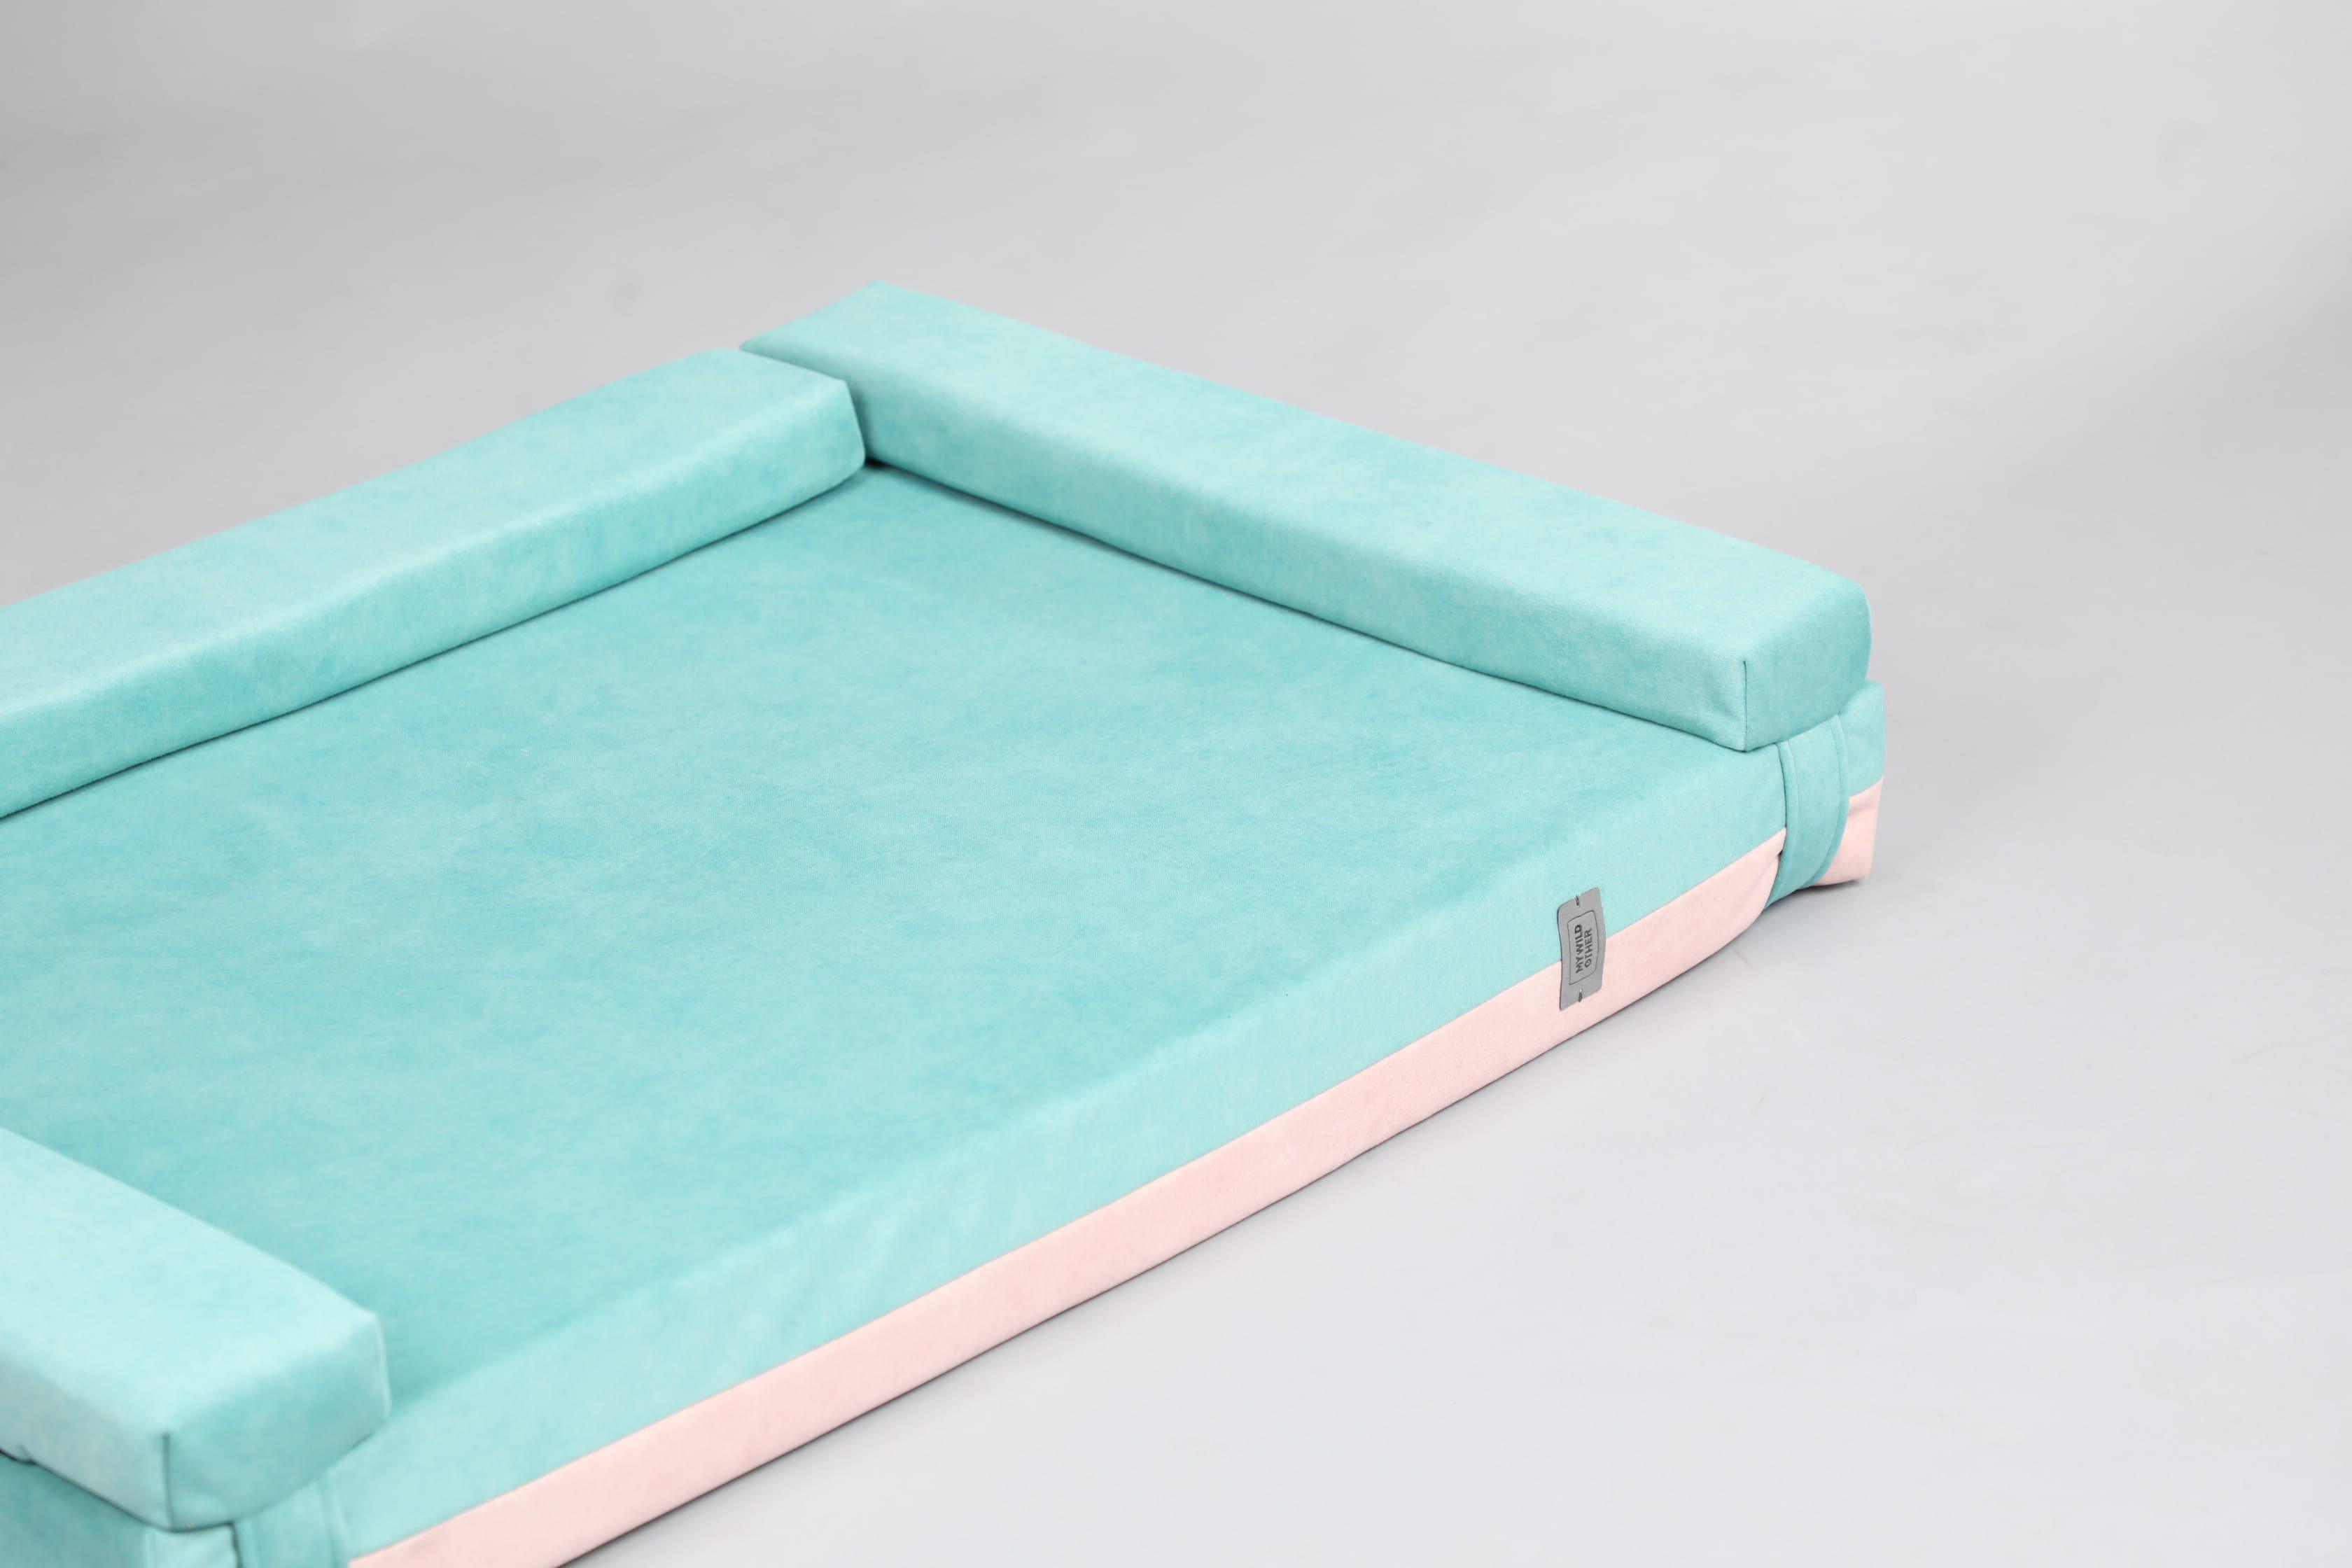 Orthopedic dog bed. Mint green+flamingo pink. 2-sided VELVET 